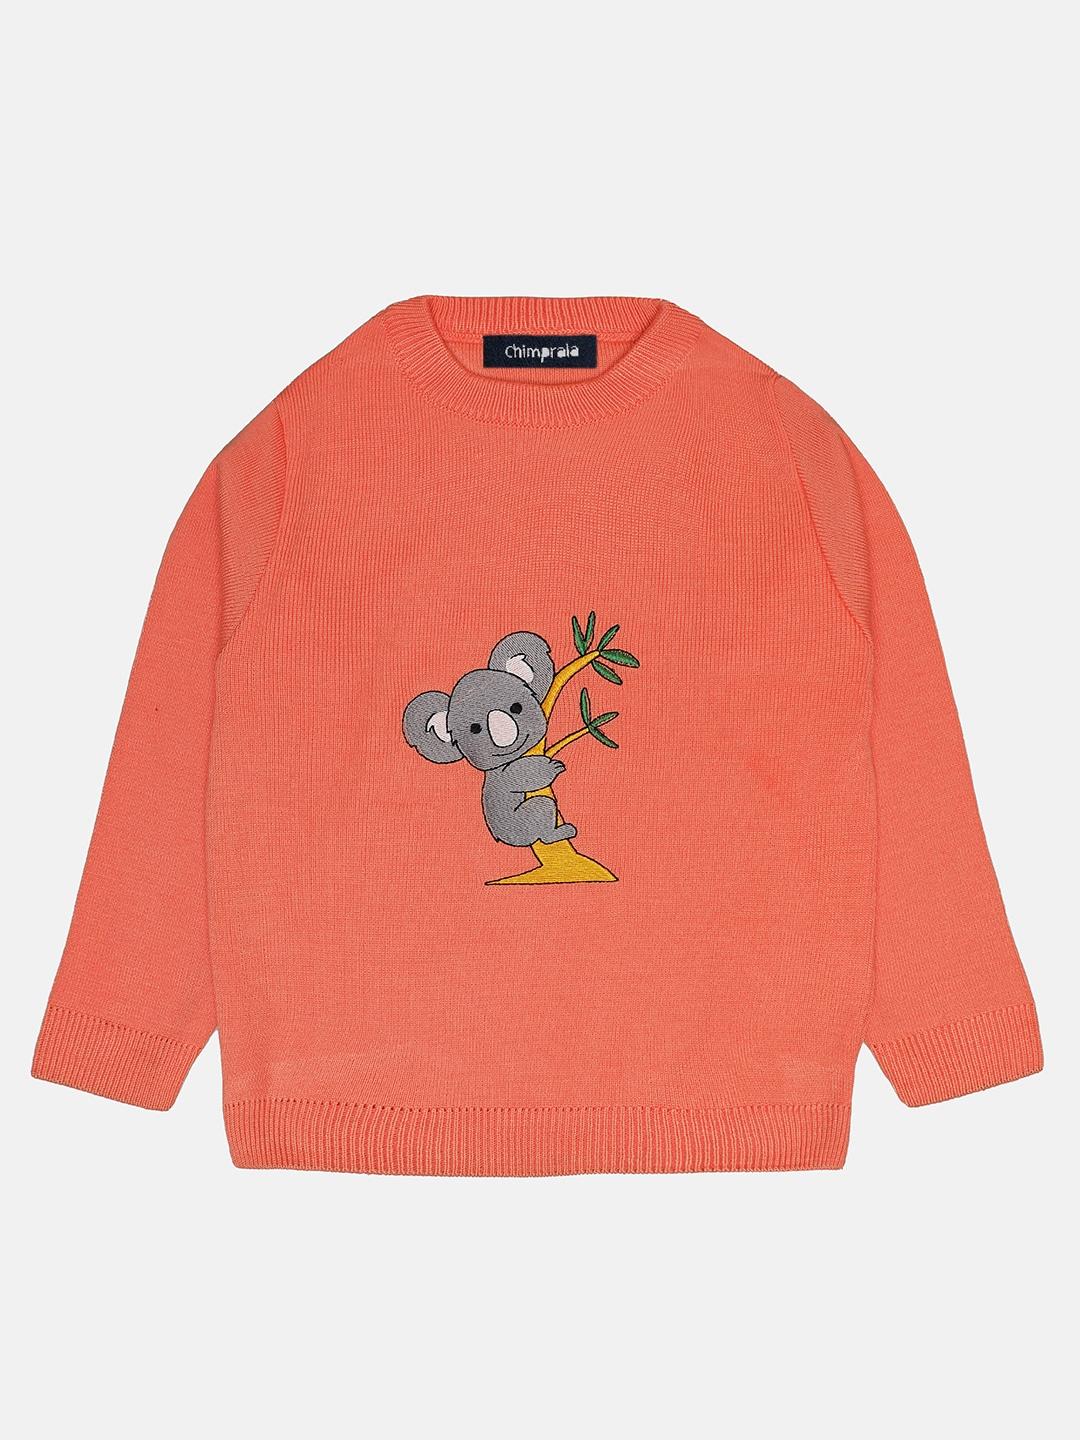 chimprala-boys-orange-&-grey-animal-printed-woolen-pullover